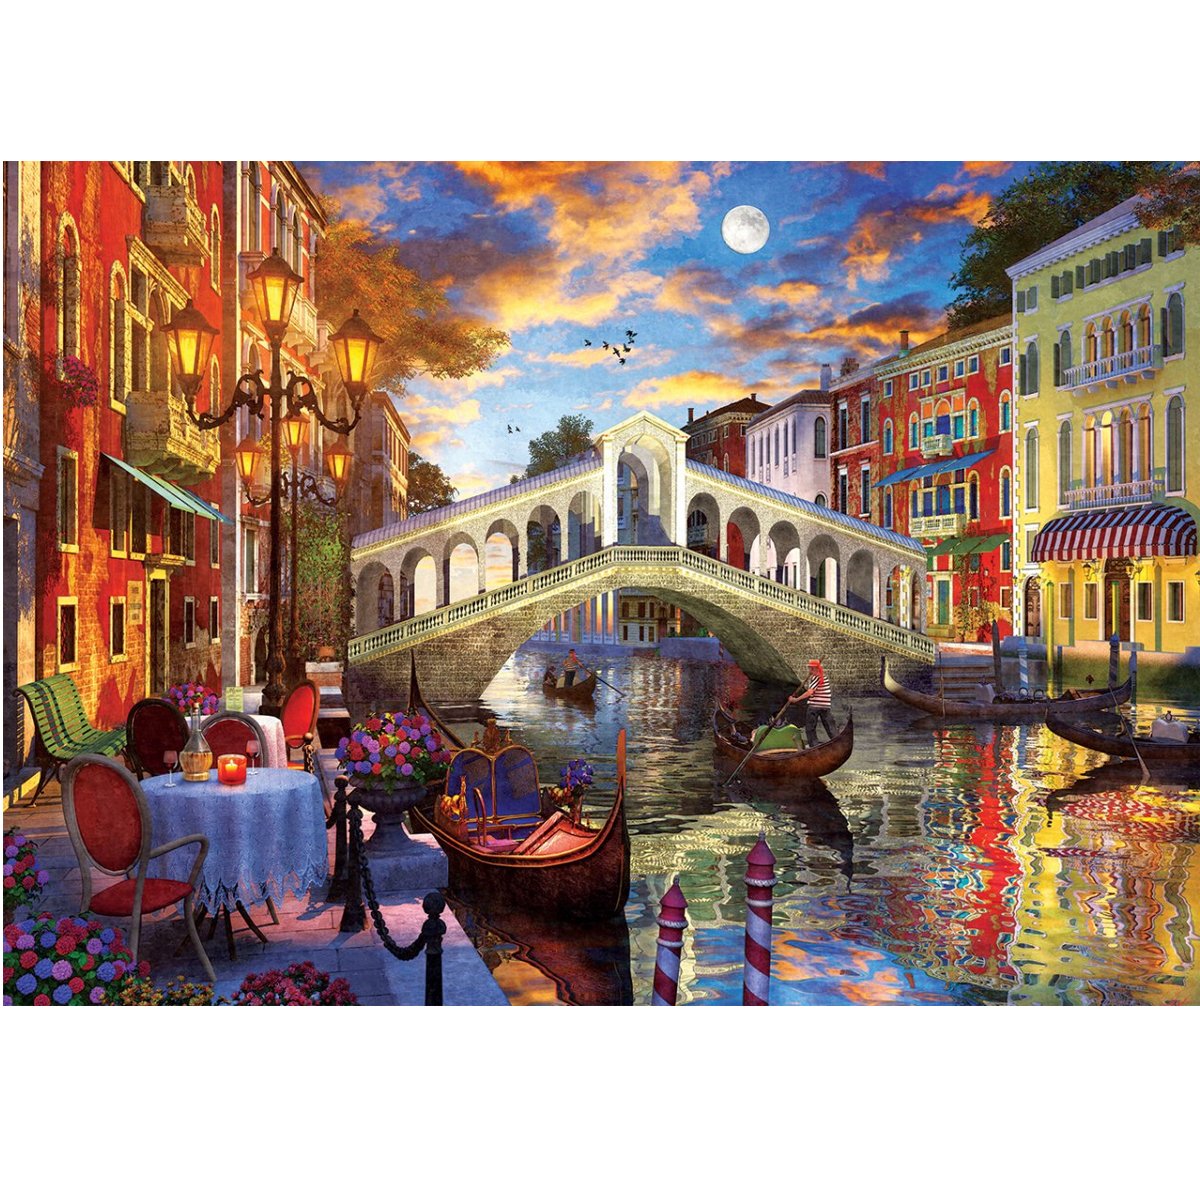 5372 Art Puzzle Rialto Köprüsü, Venedik 1500 parça Puzzle / +15 yaş